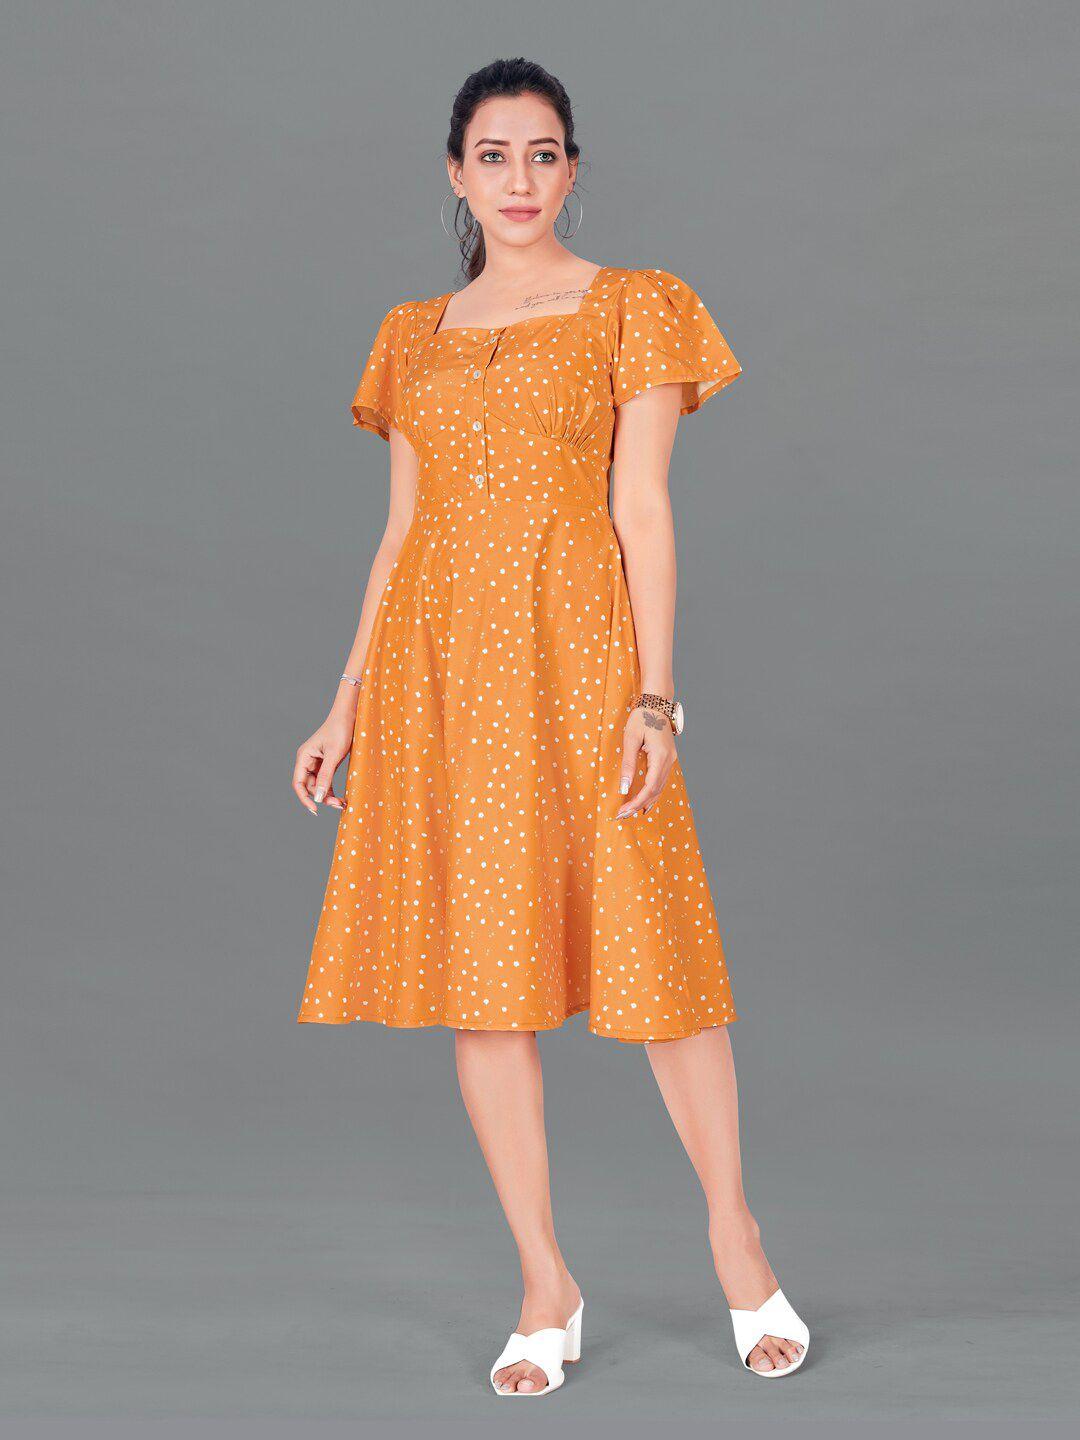 fashion dream orange dress